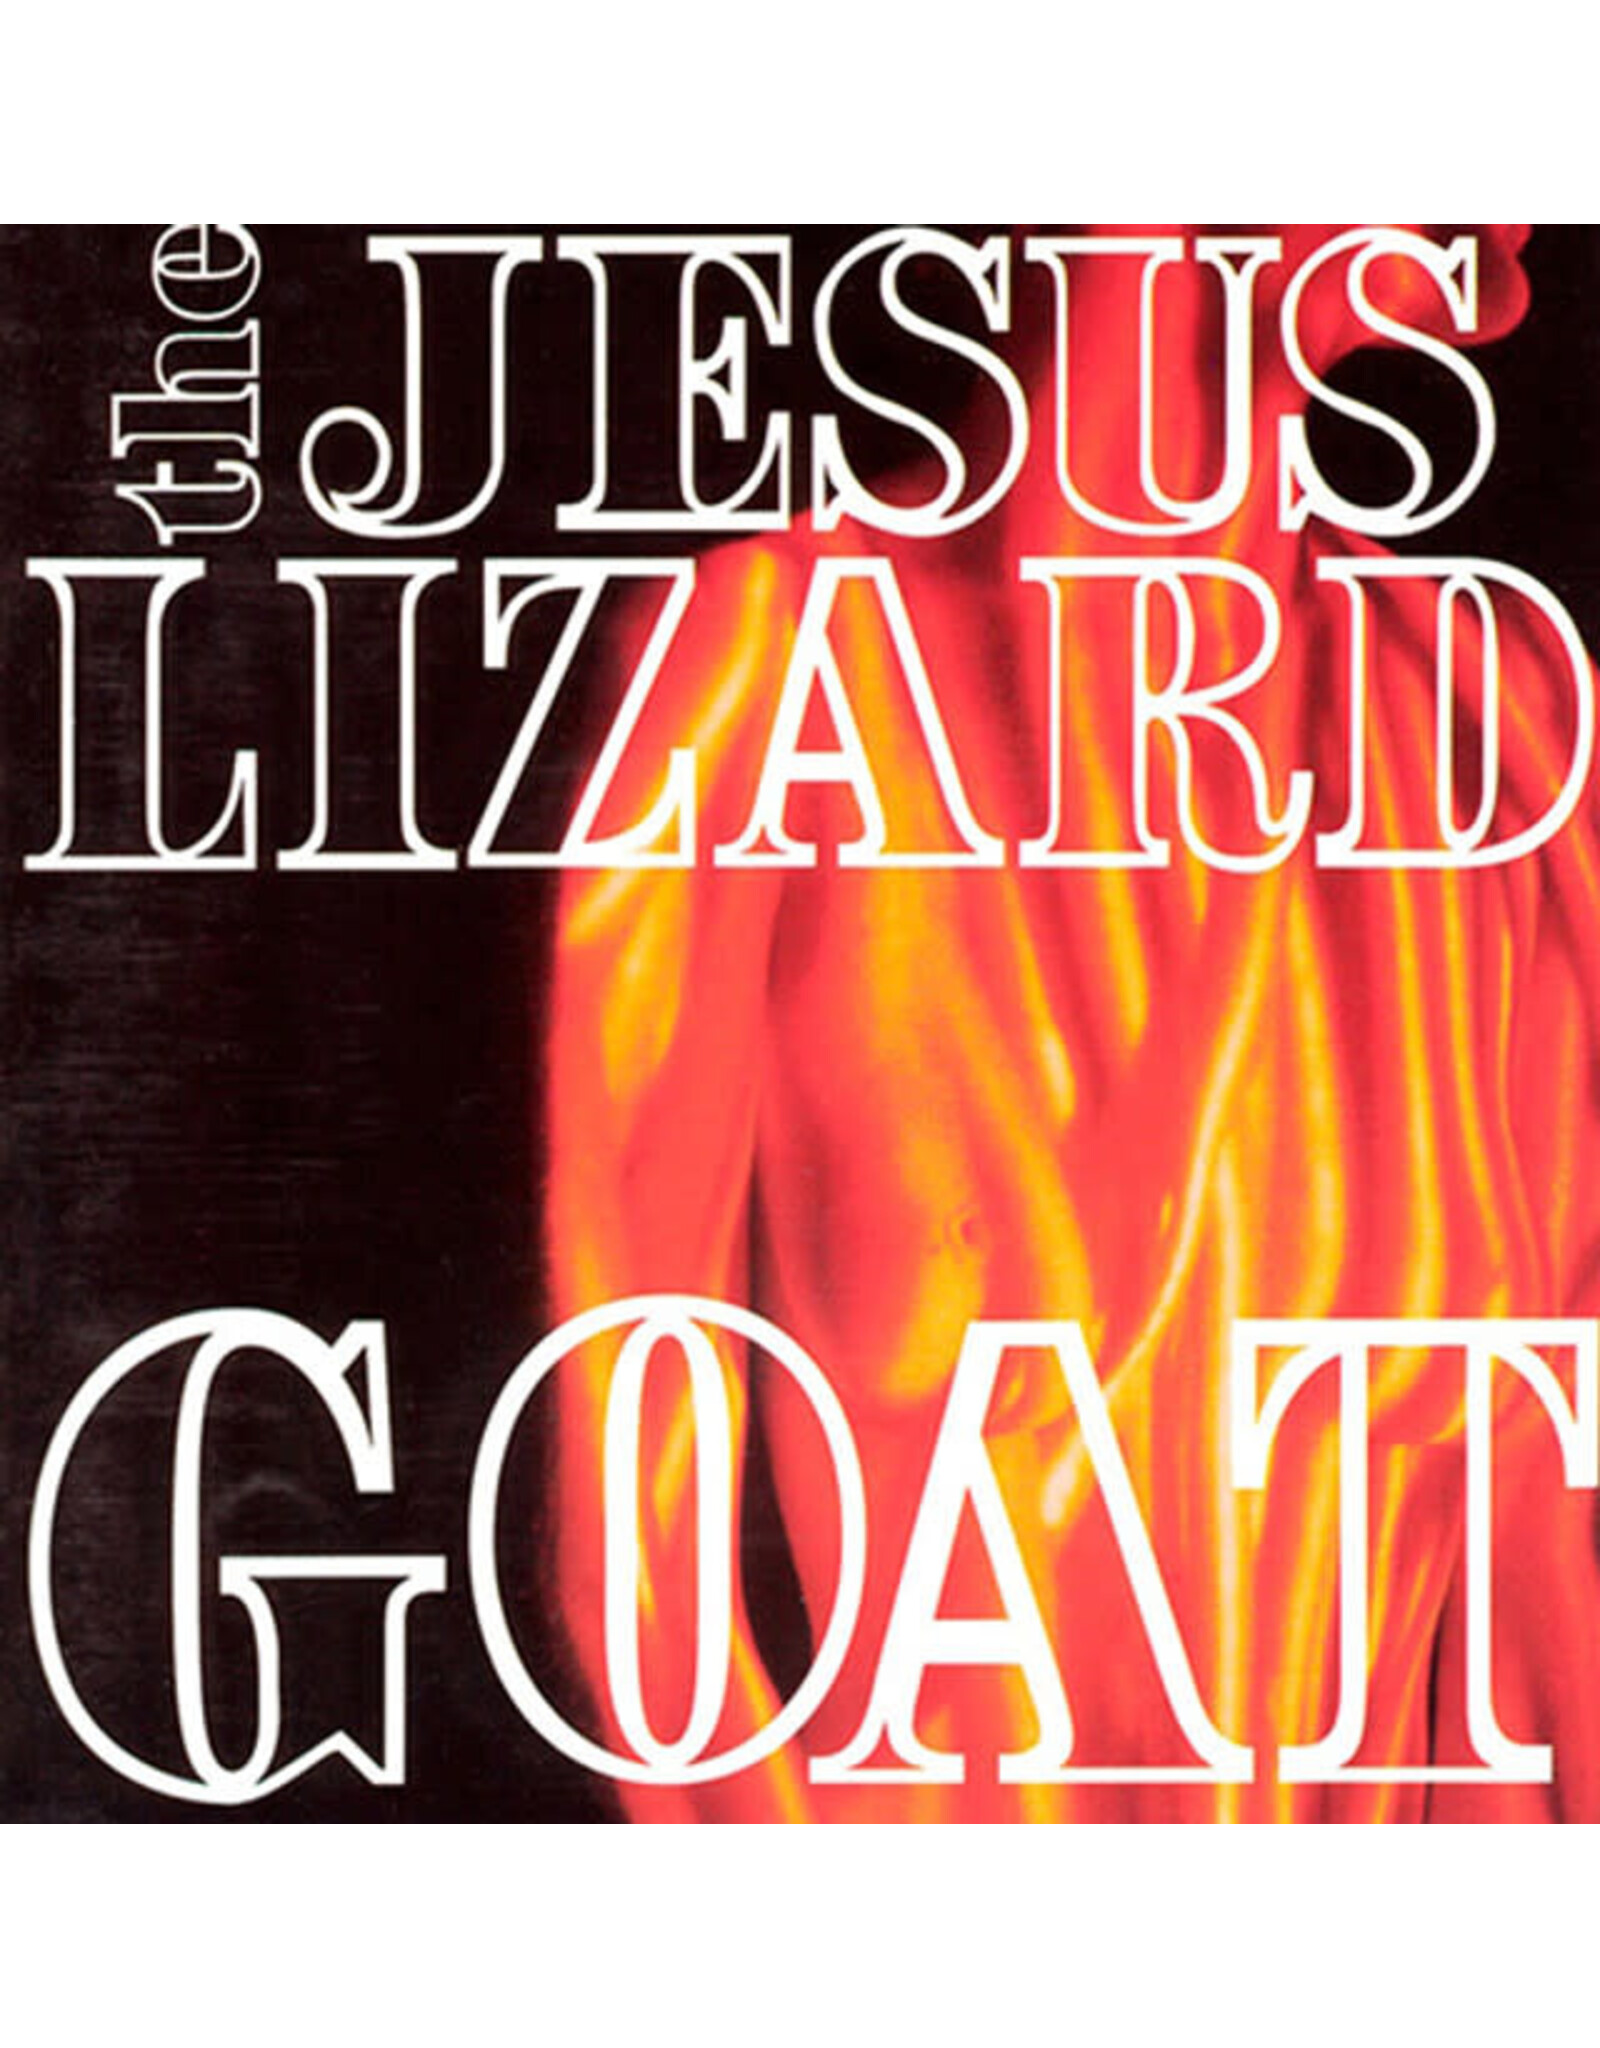 Touch & Go Jesus Lizard: Goat (180g-white) LP